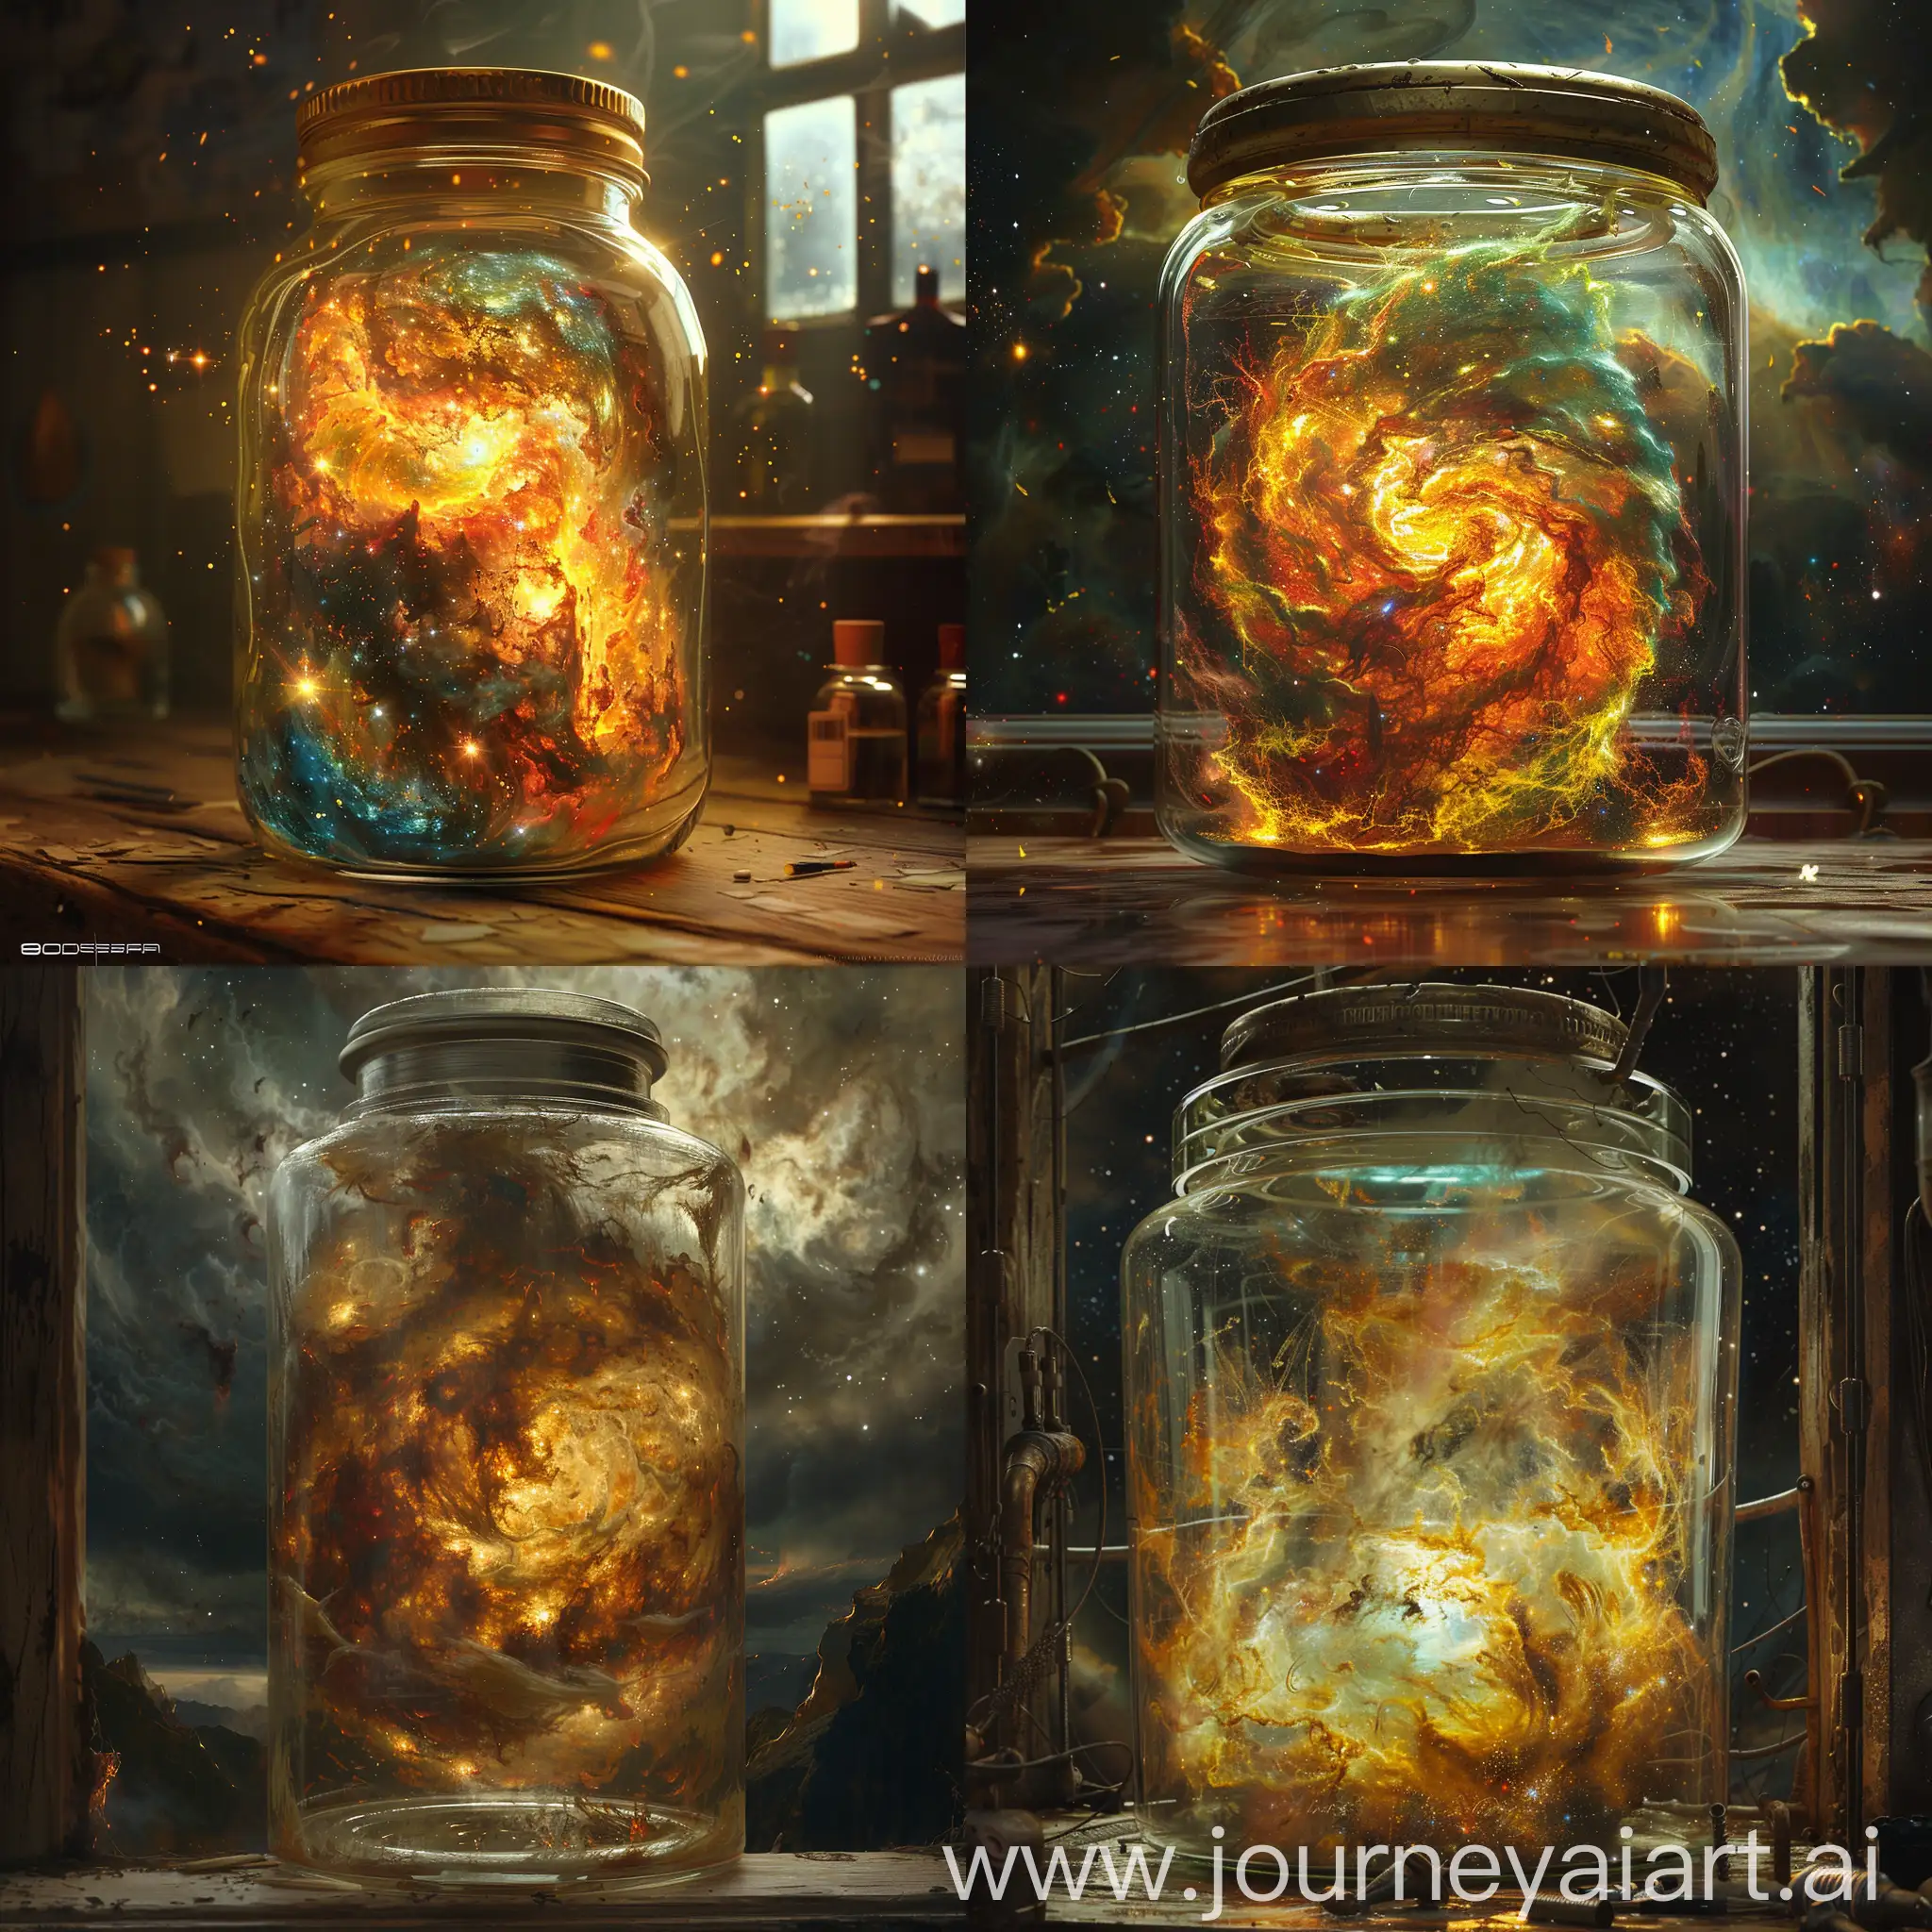 Spectacular-Galaxy-Nebula-Captured-in-a-Jar-Surrealistic-Hyperdetailed-Art